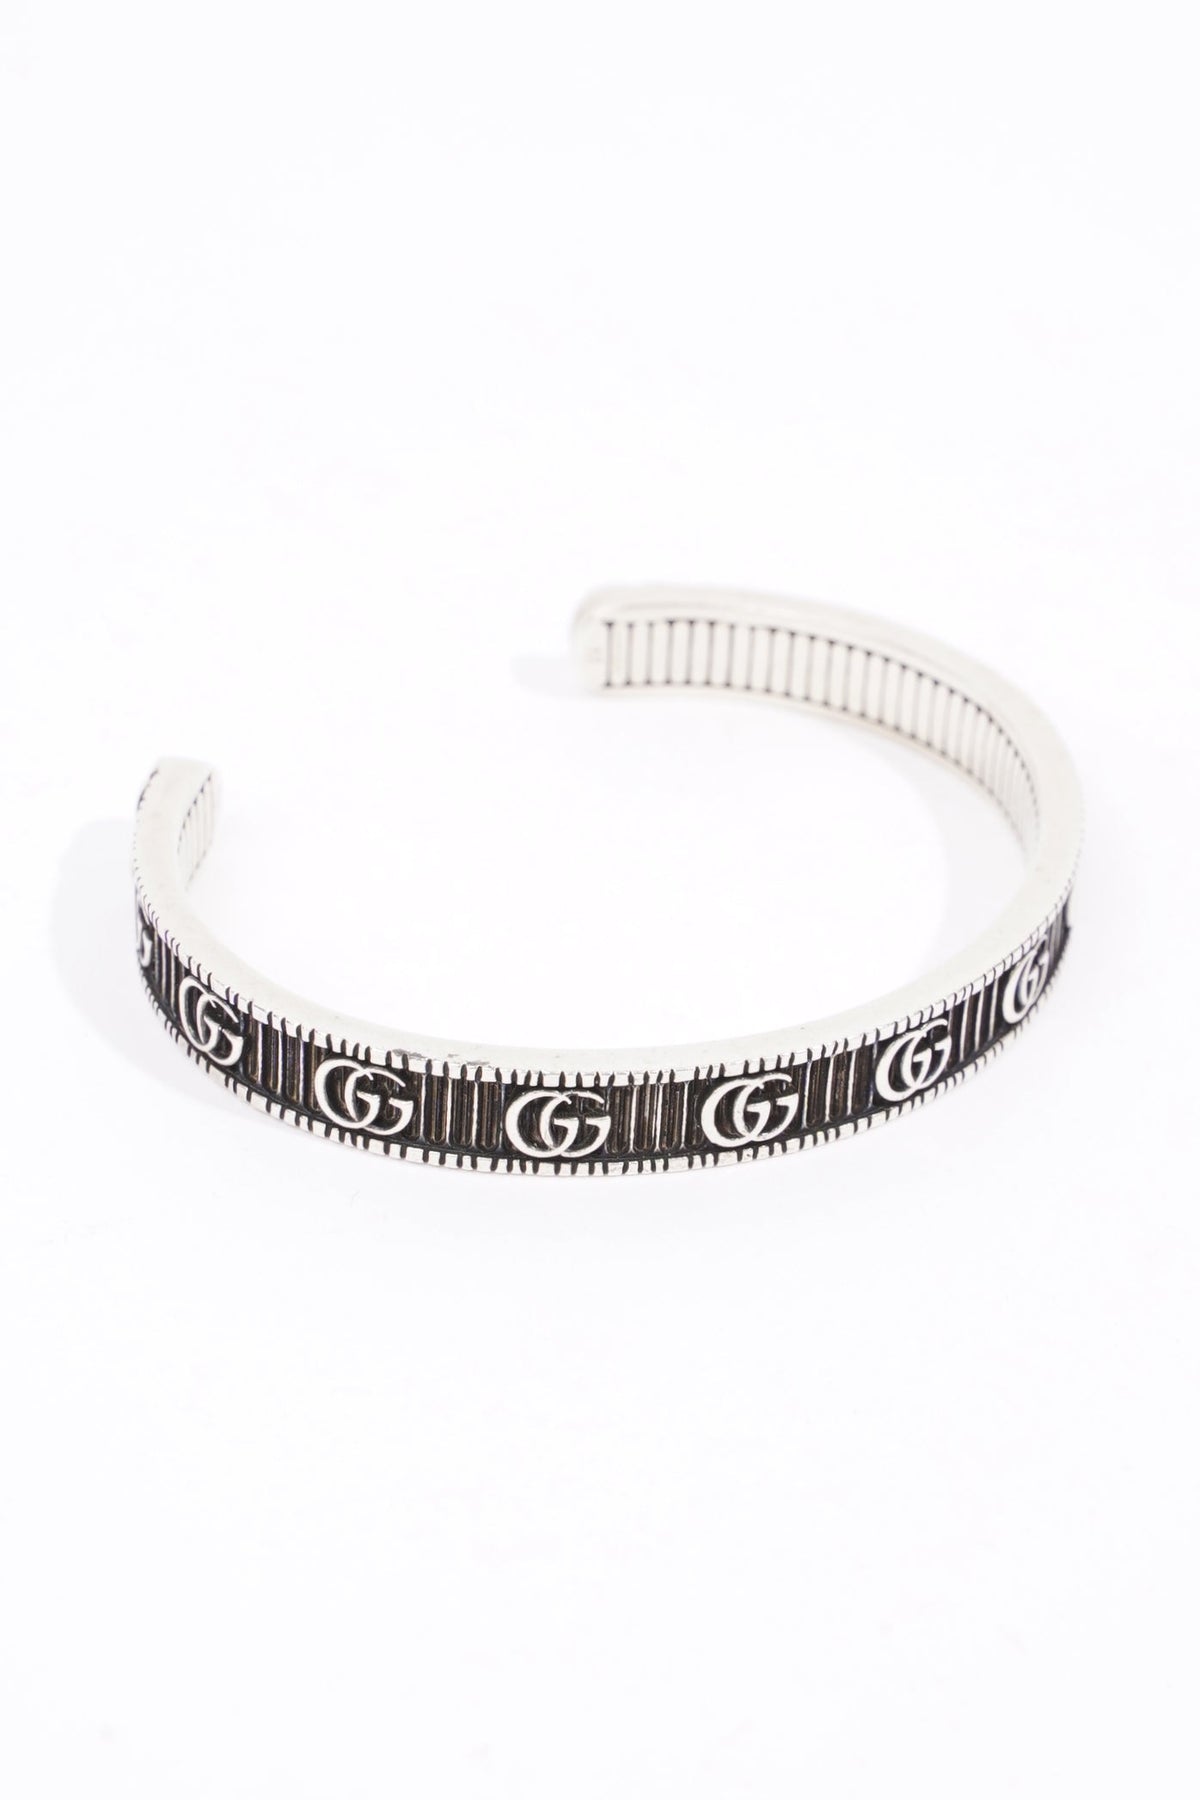 NEW Auth GUCCI .925 STERLING SILVER and ENAMEL BUCKLE Bracelet IT-18 L |  eBay